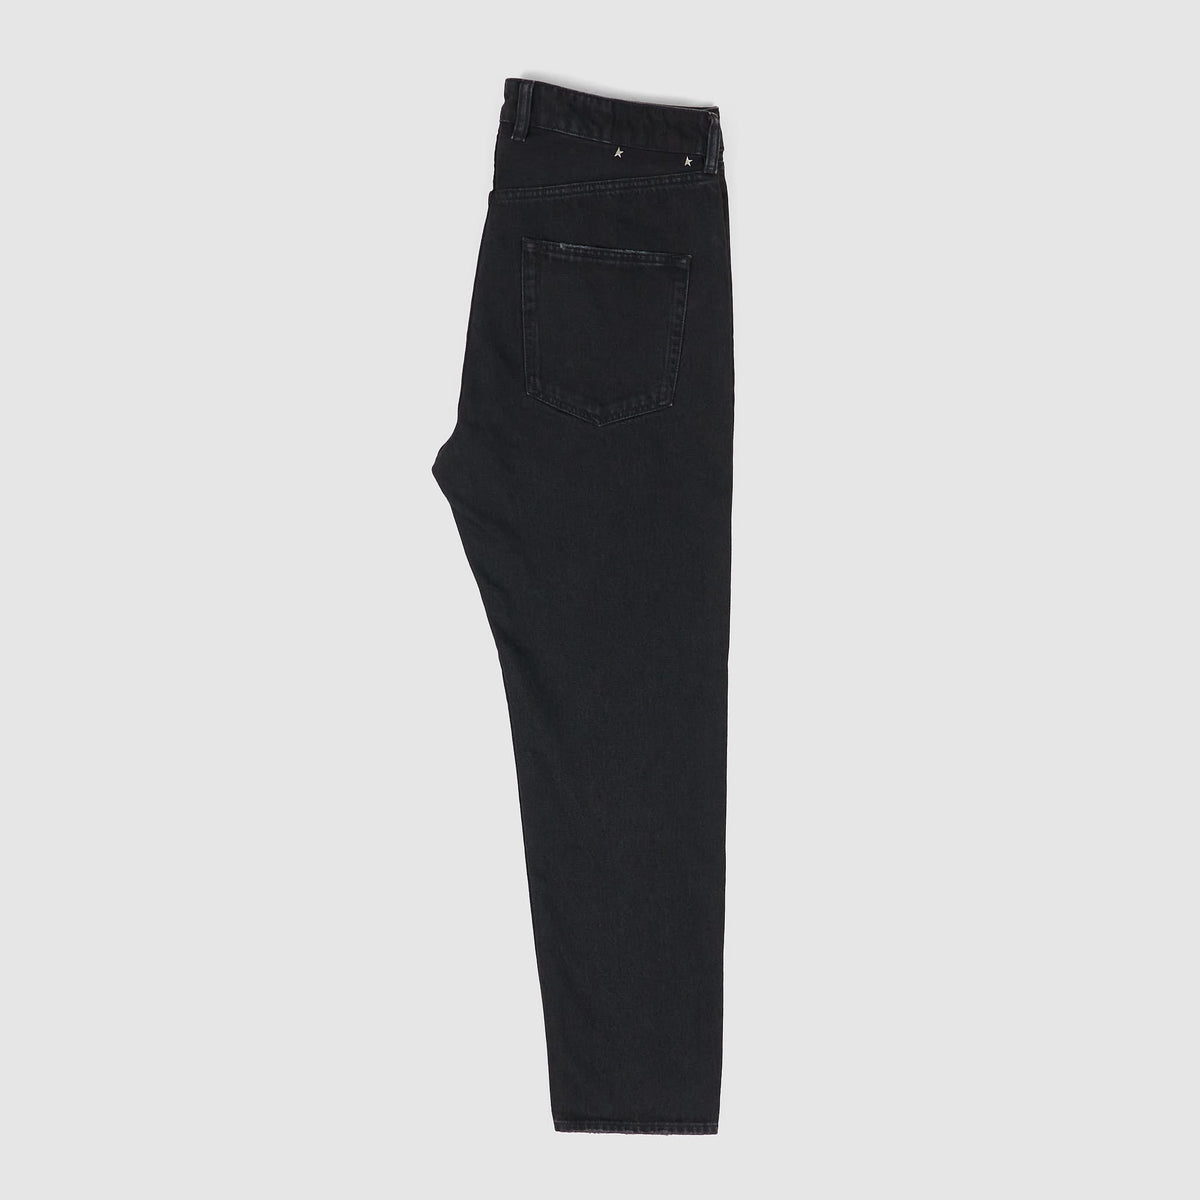 Golden Goose 5-Pocket Black Denim Relaxed Jeans